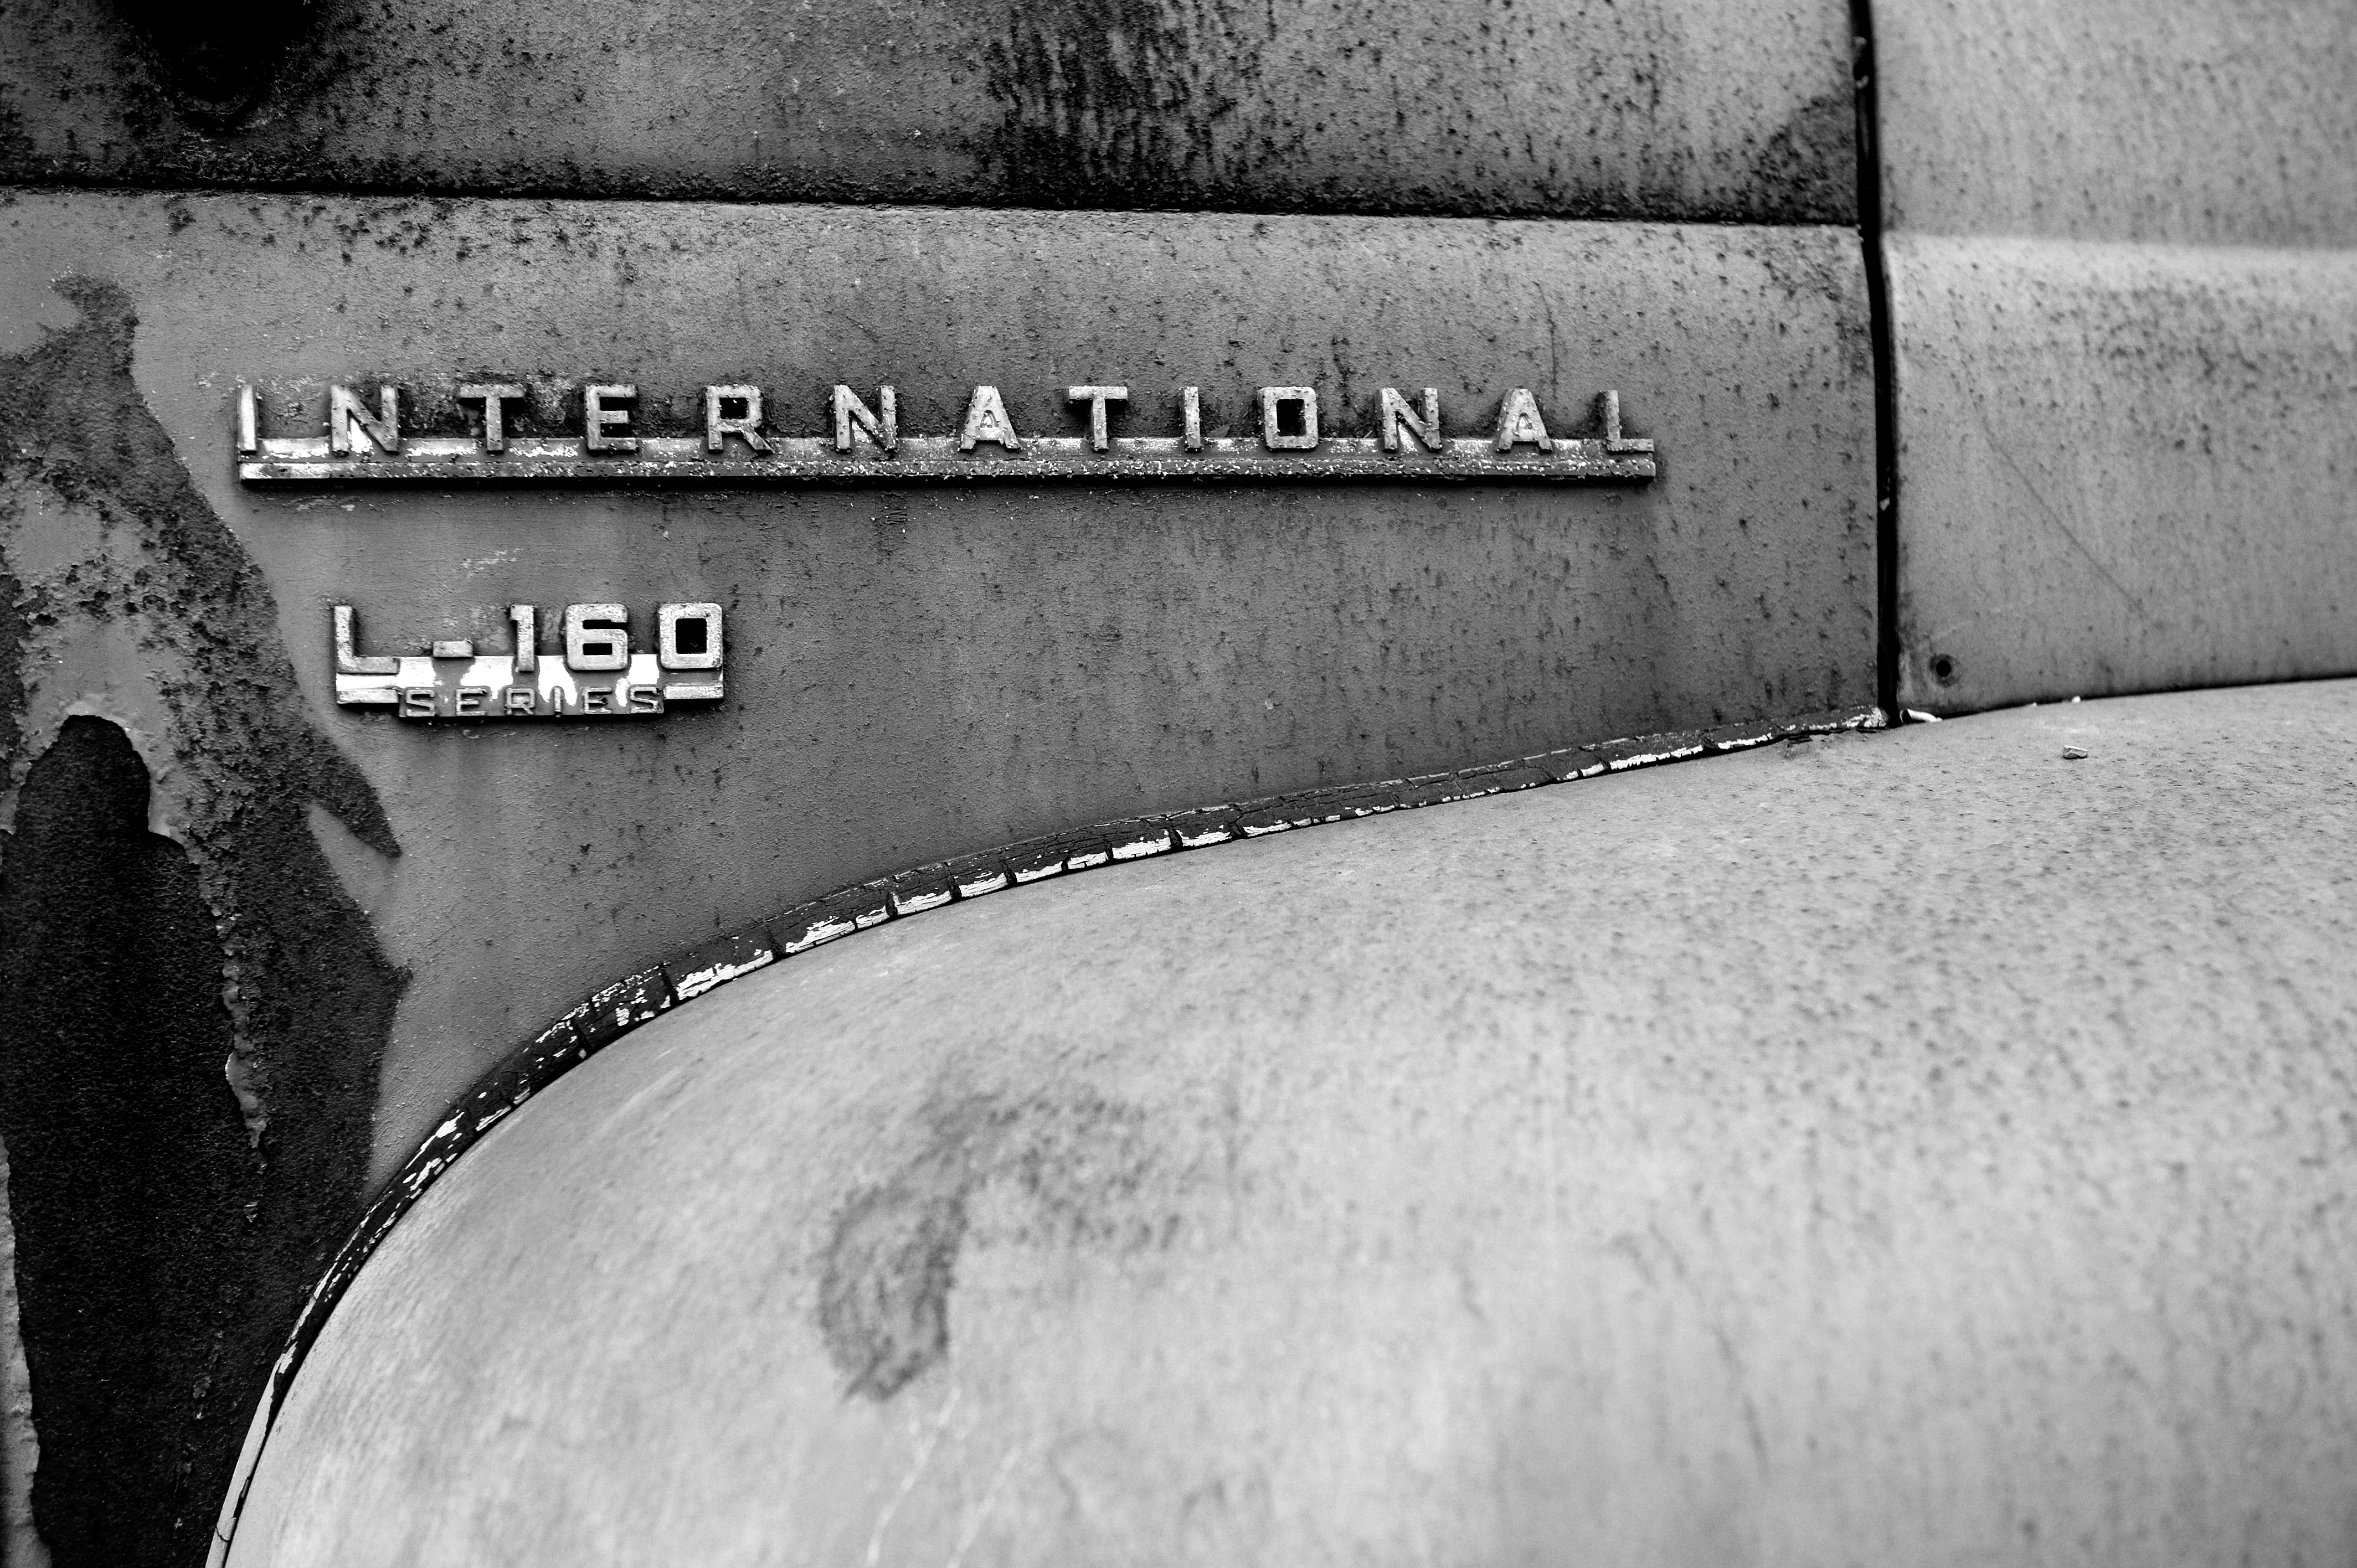 International L-160 profile | Flickr - Photo Sharing!